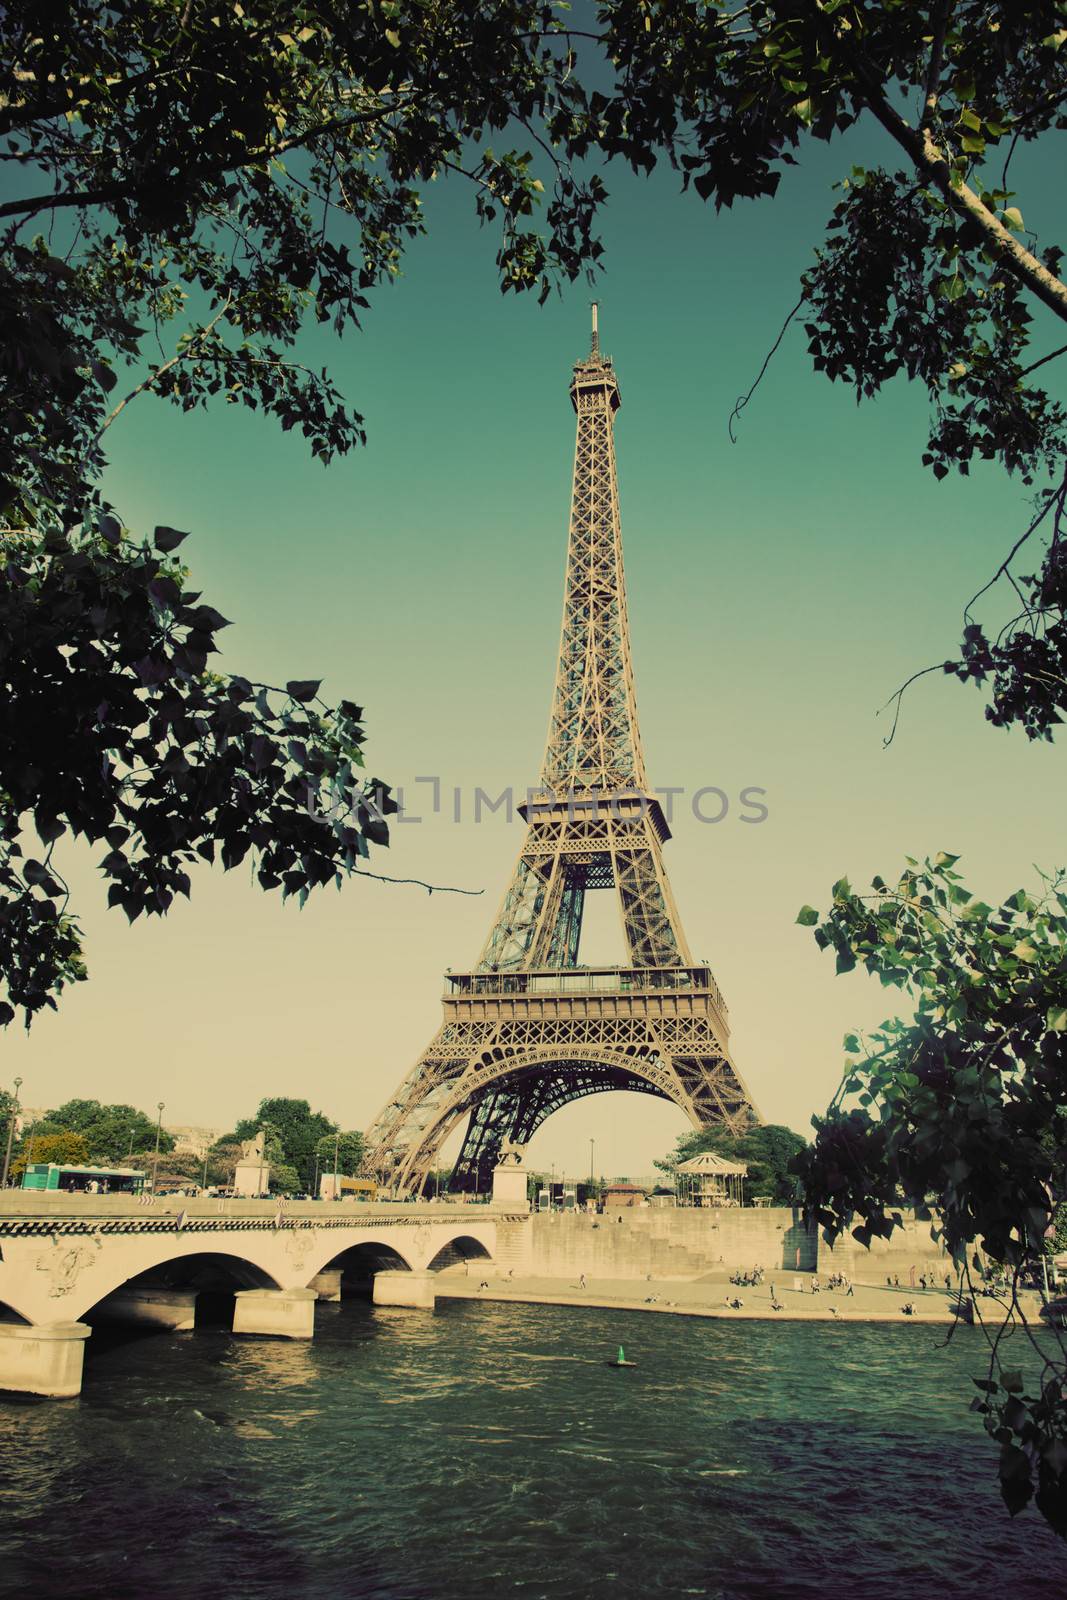 Eiffel Tower and bridge on Seine river in Paris, France. Vintage retro style